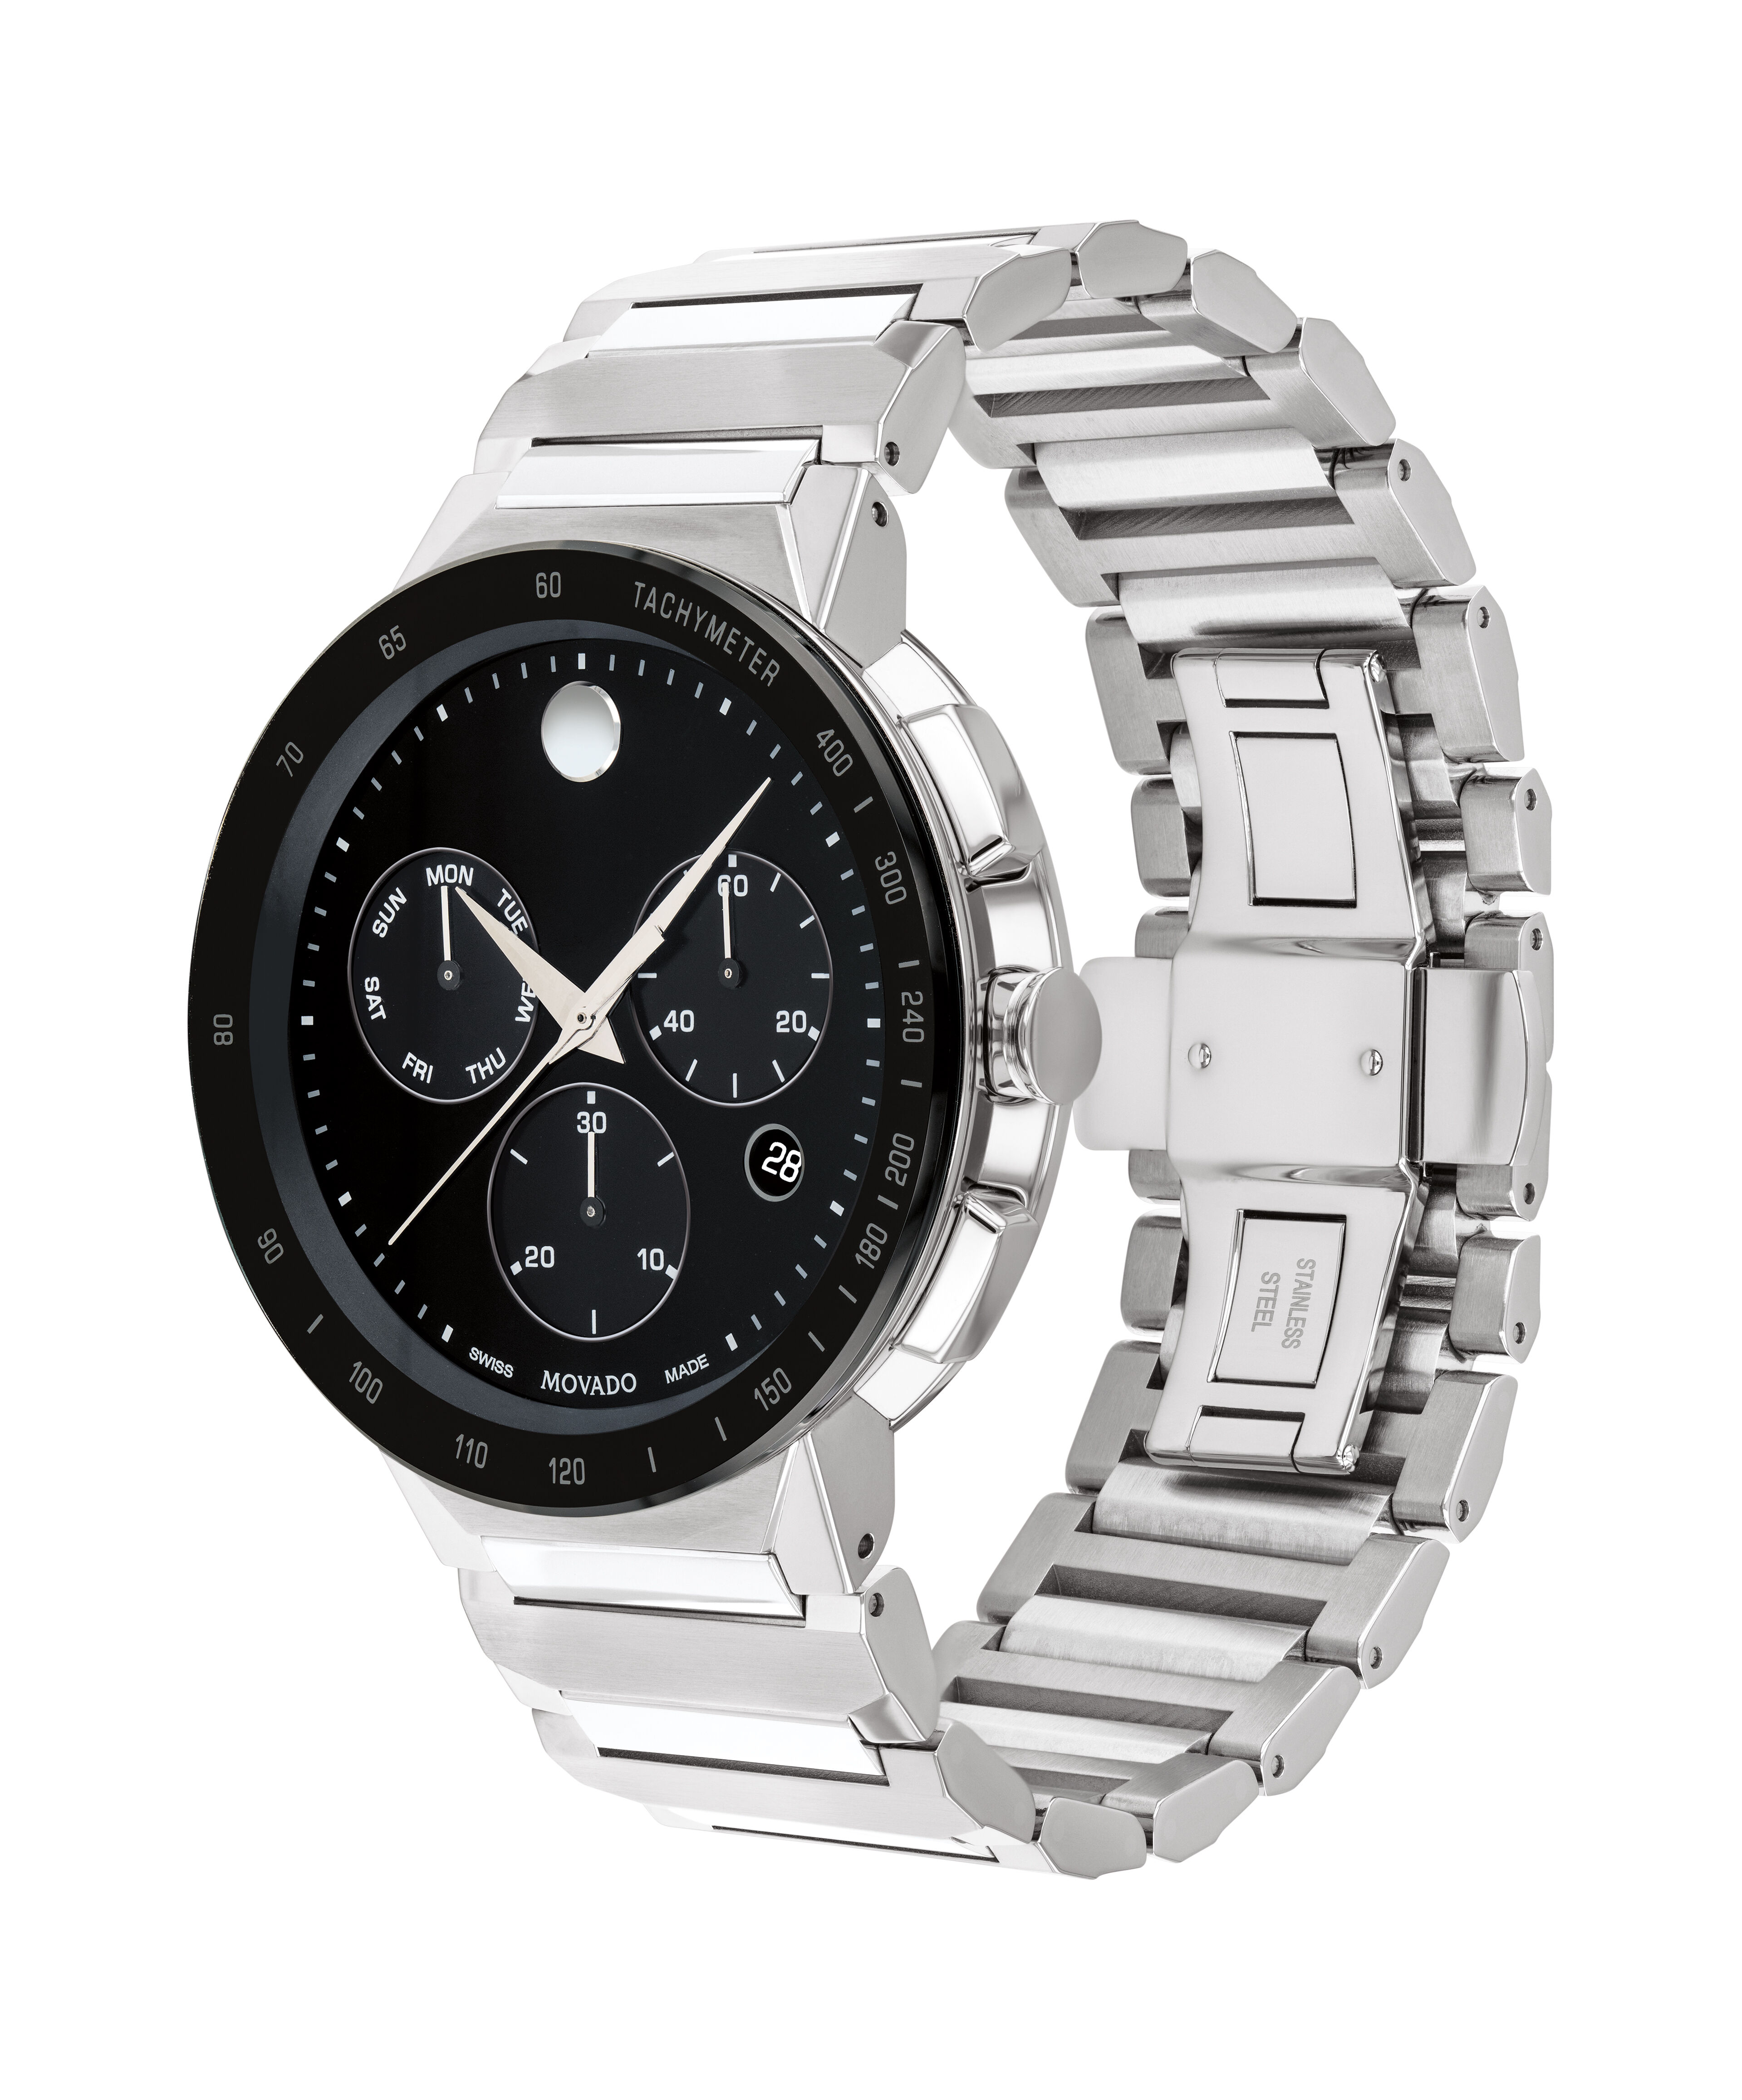 Replica Watch Sales Amazon